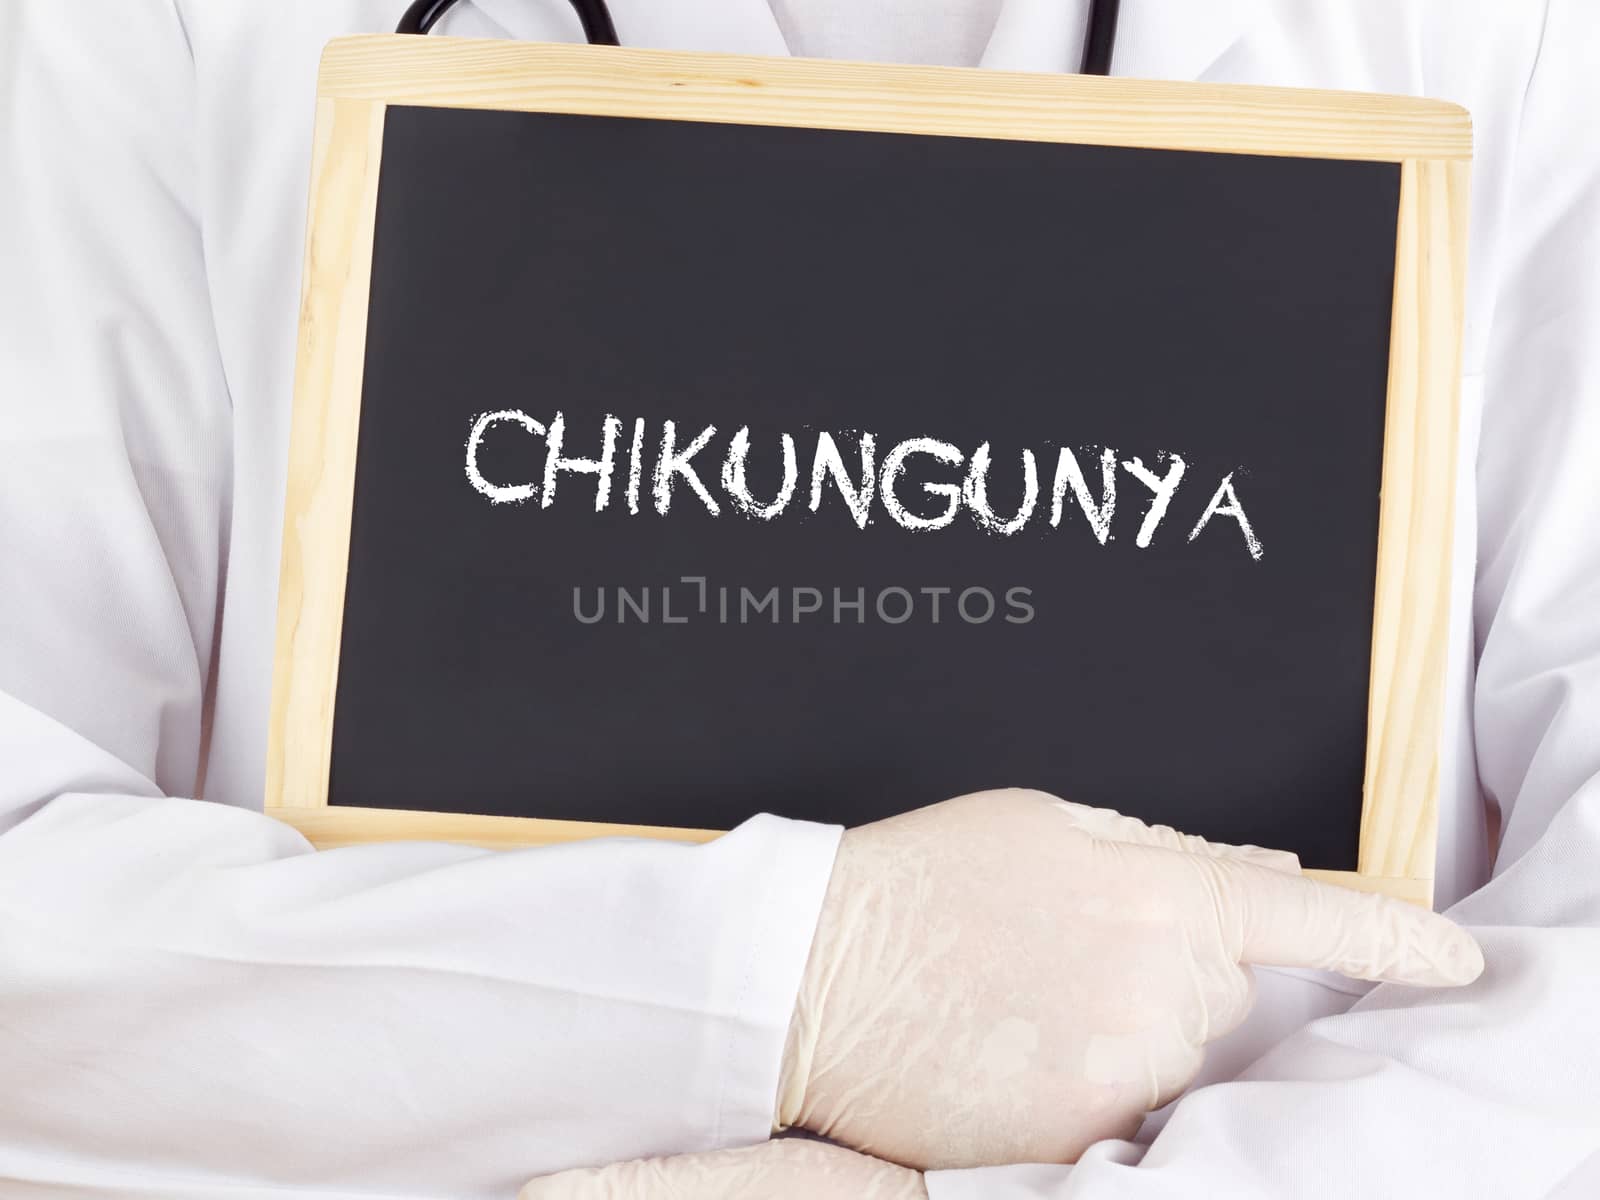 Doctor shows information on blackboard: Chikungunya